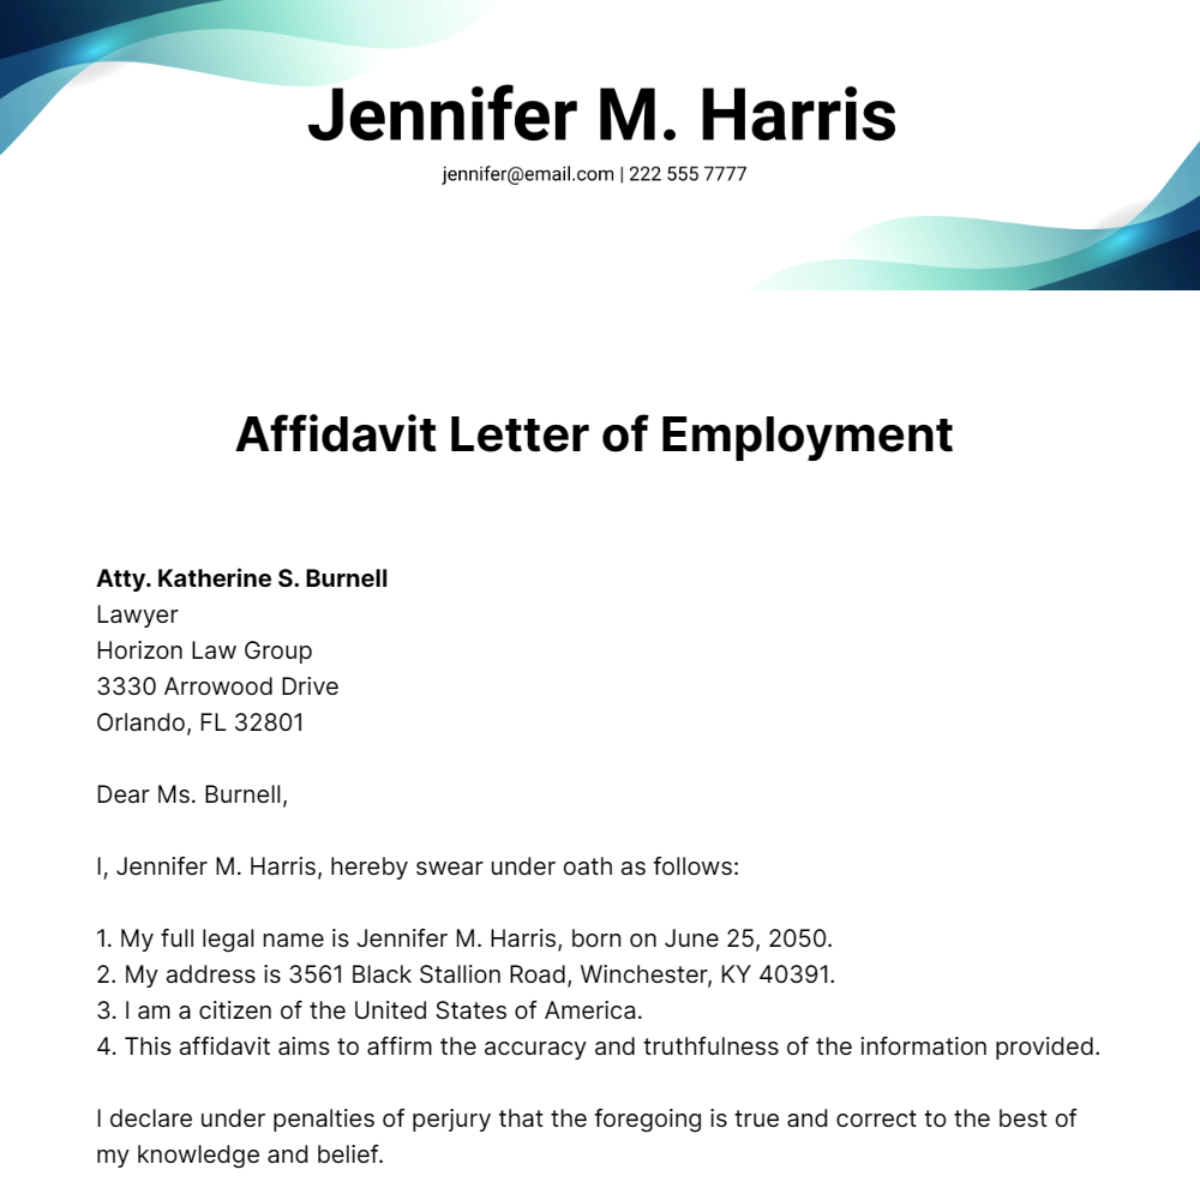 Affidavit Letter of Employment  Template